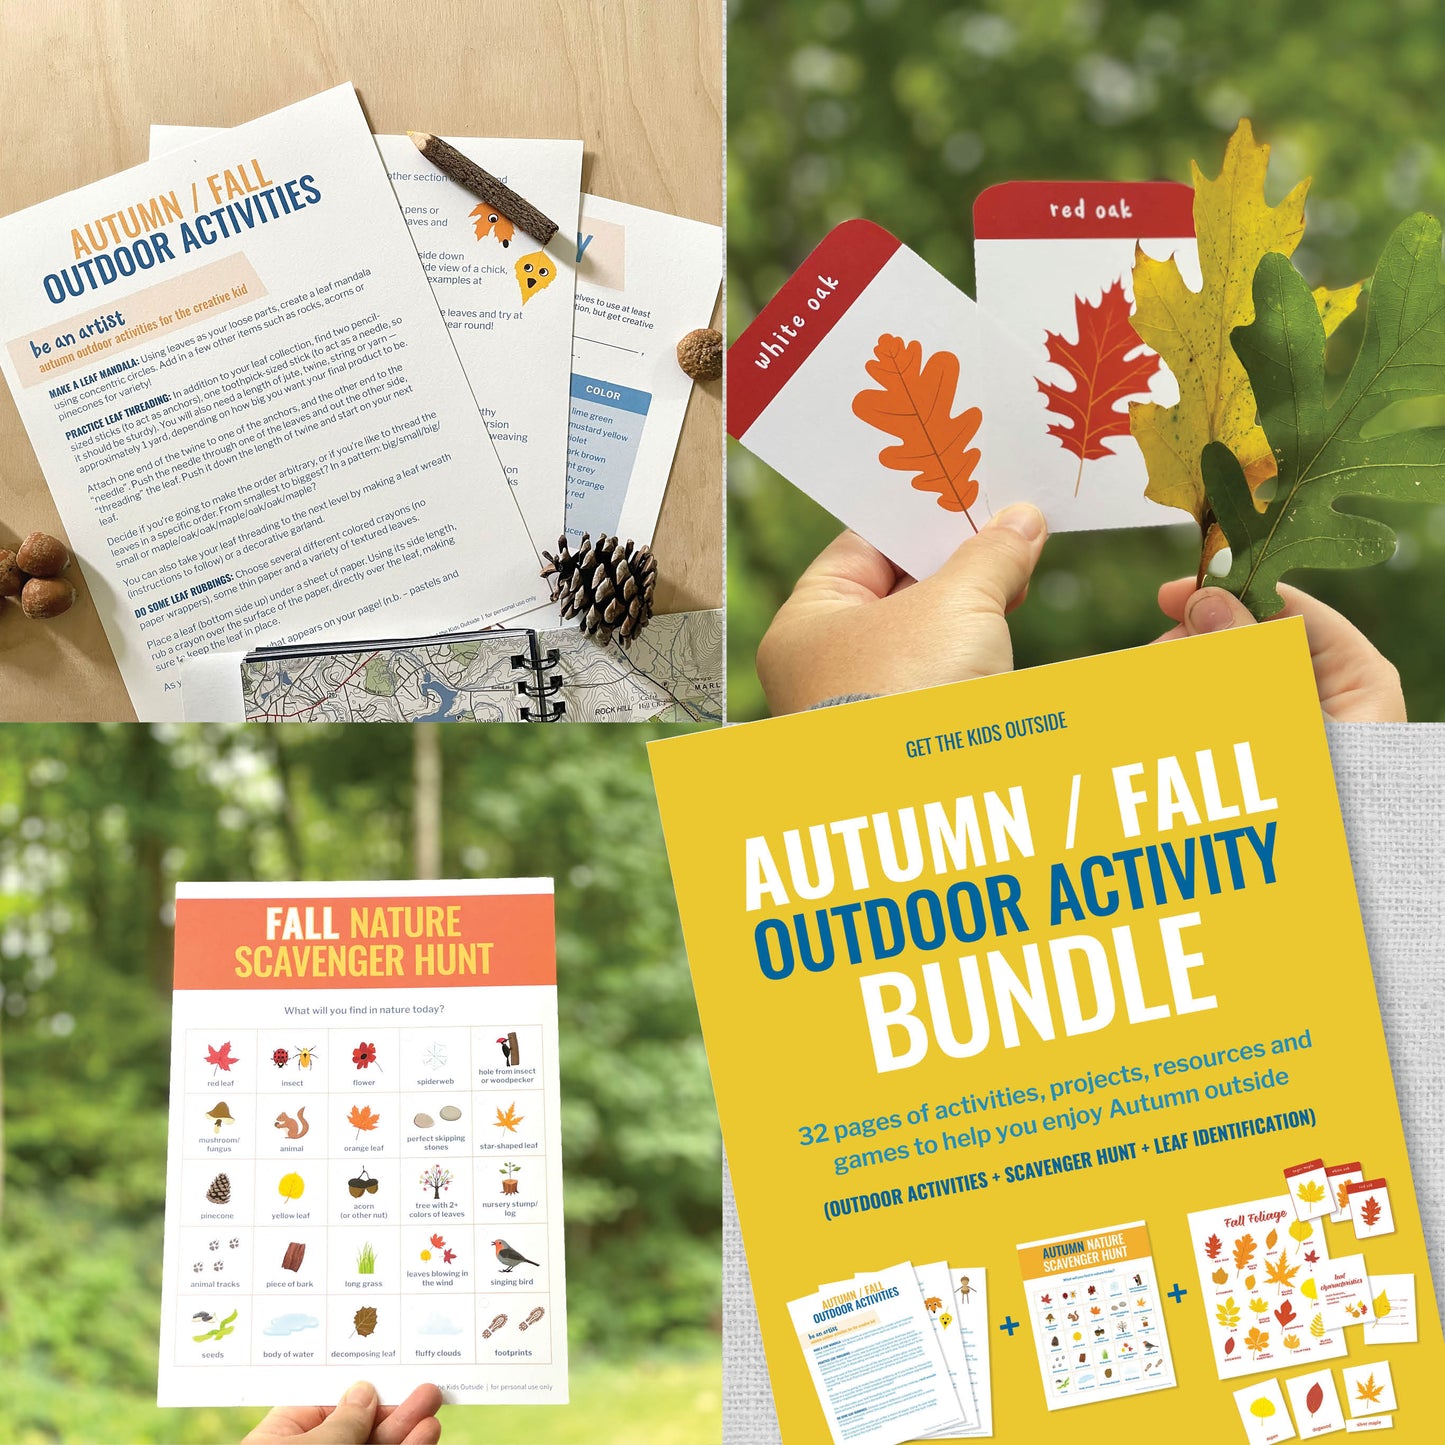 Autumn / Fall Outdoor Activity BUNDLE